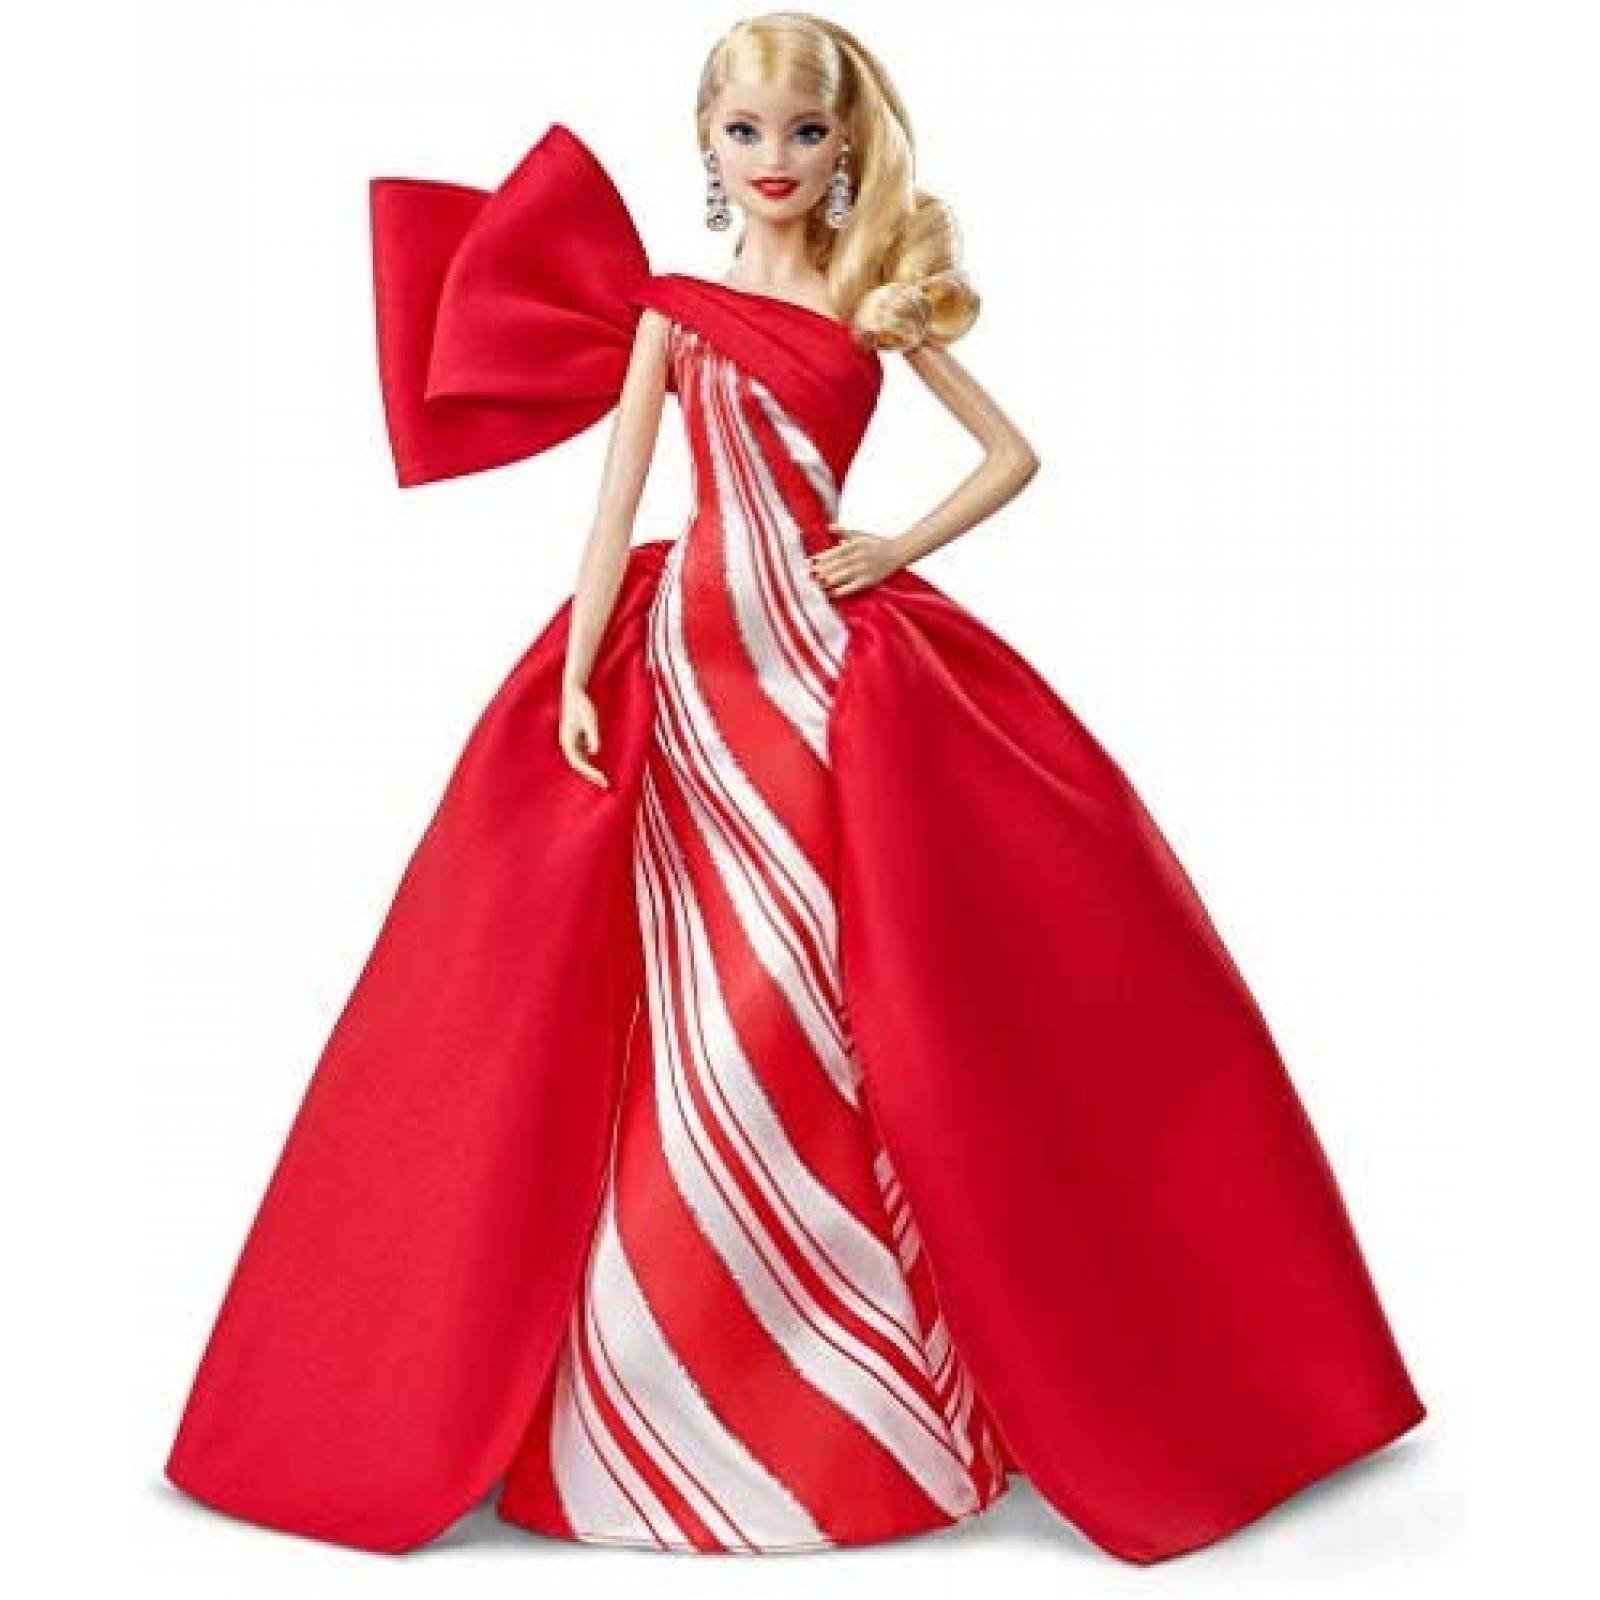 Muñeca de Barbie Mattel 2019 con vestido elegante -rojo